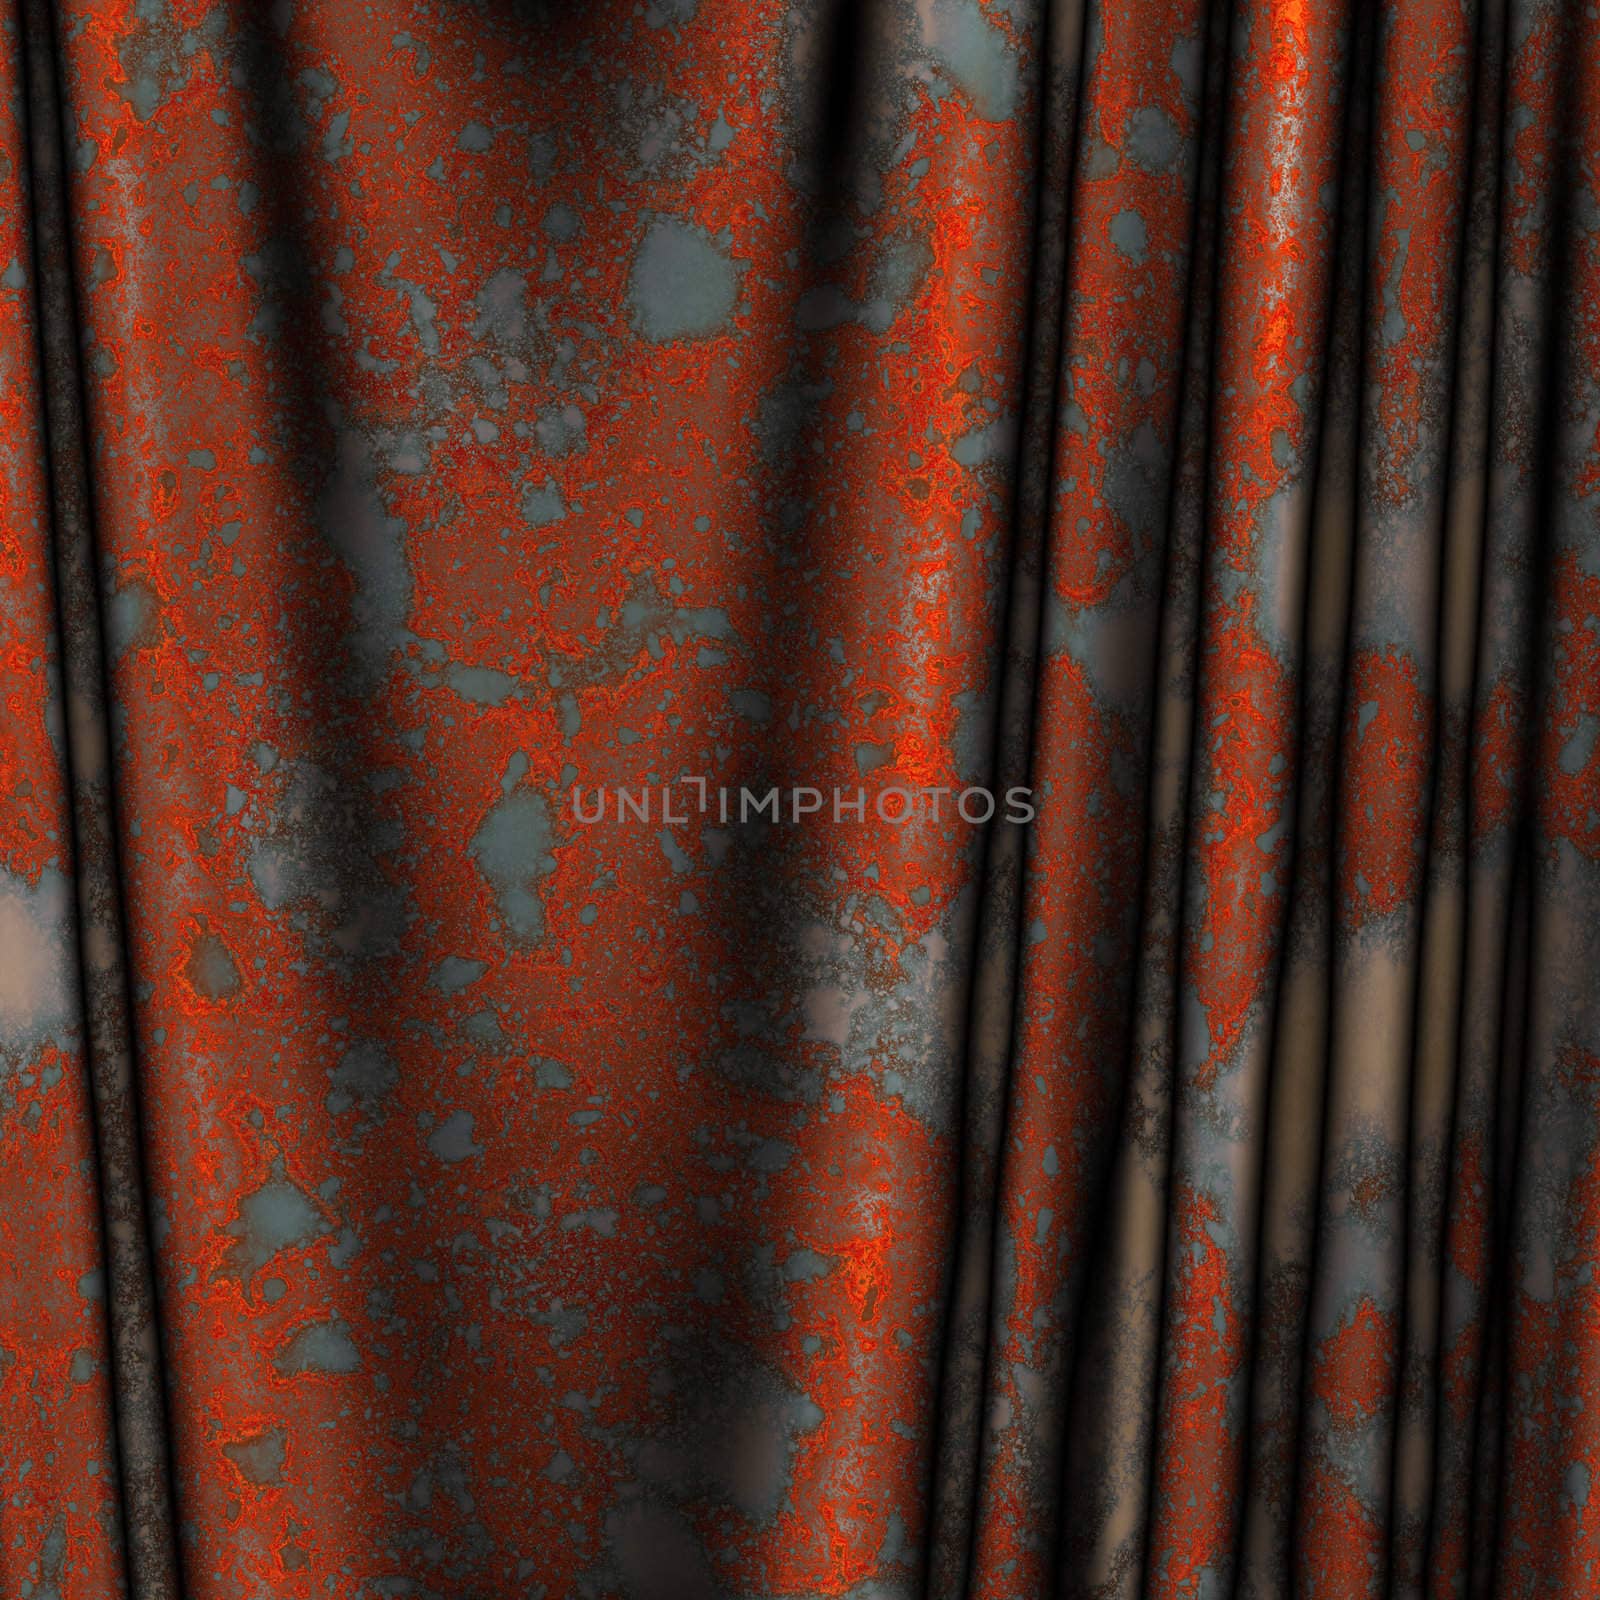 Curtain Folds by patballard